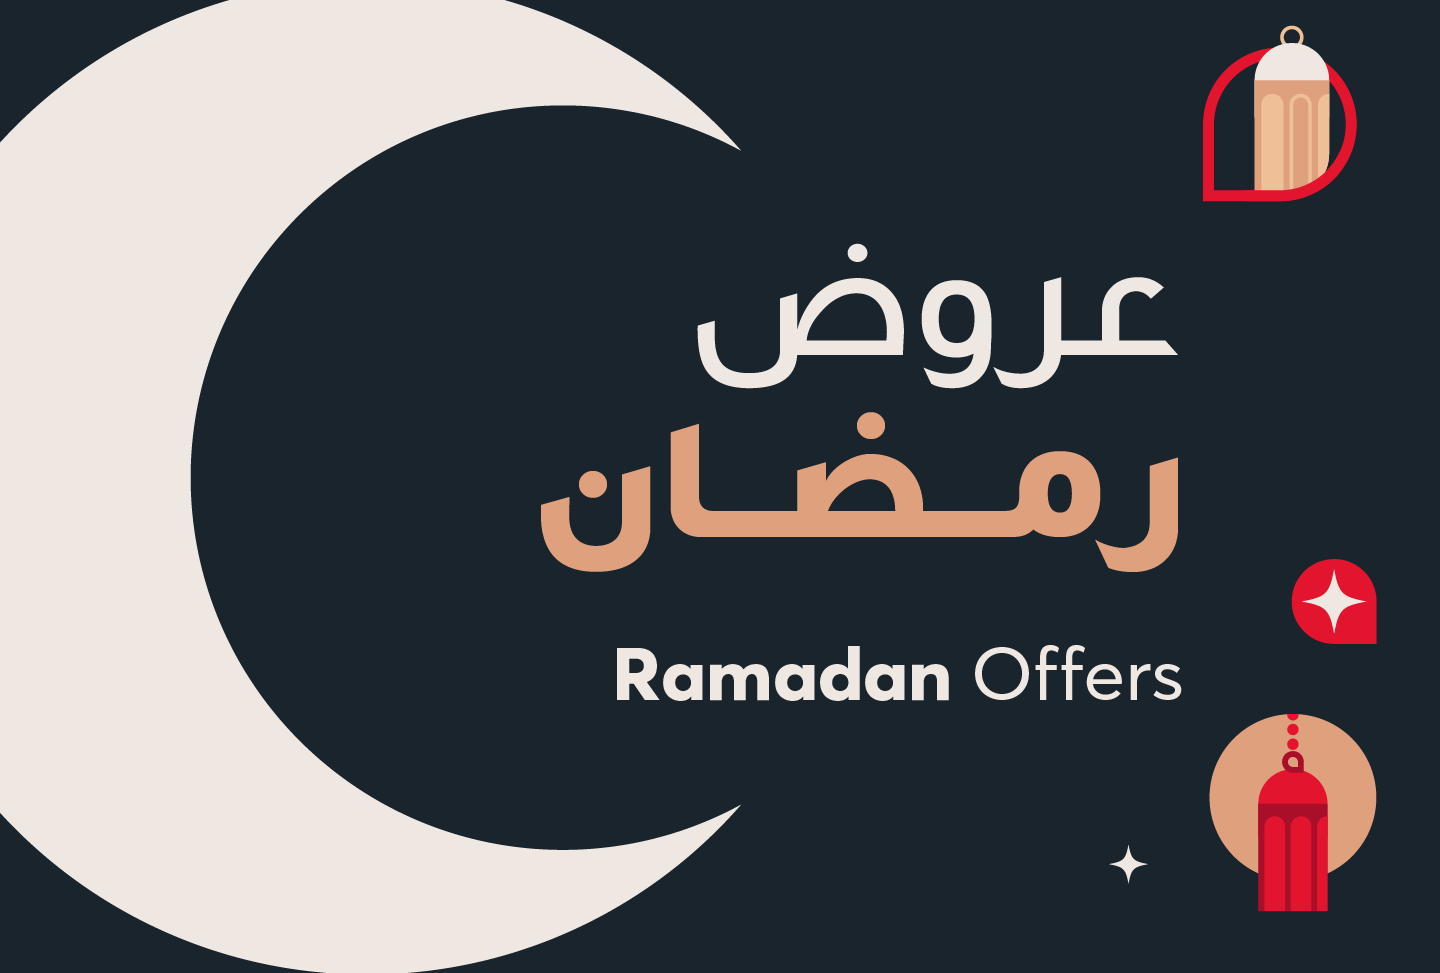 Ramadan offers